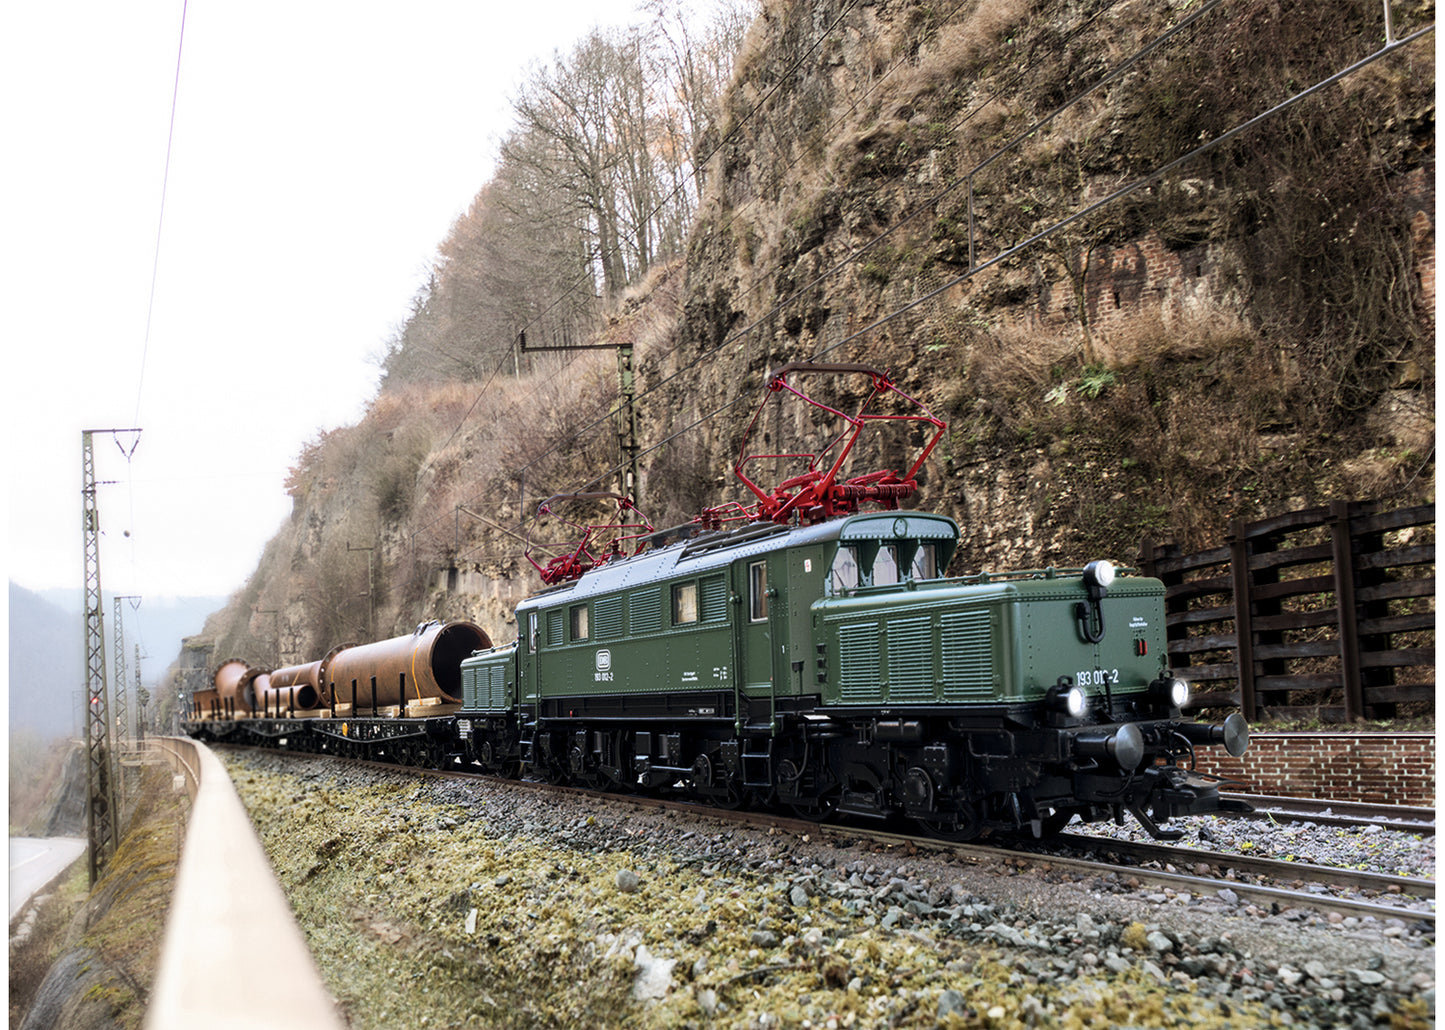 Trix 22872 - DB cl 193 Electric Freight Locomotive